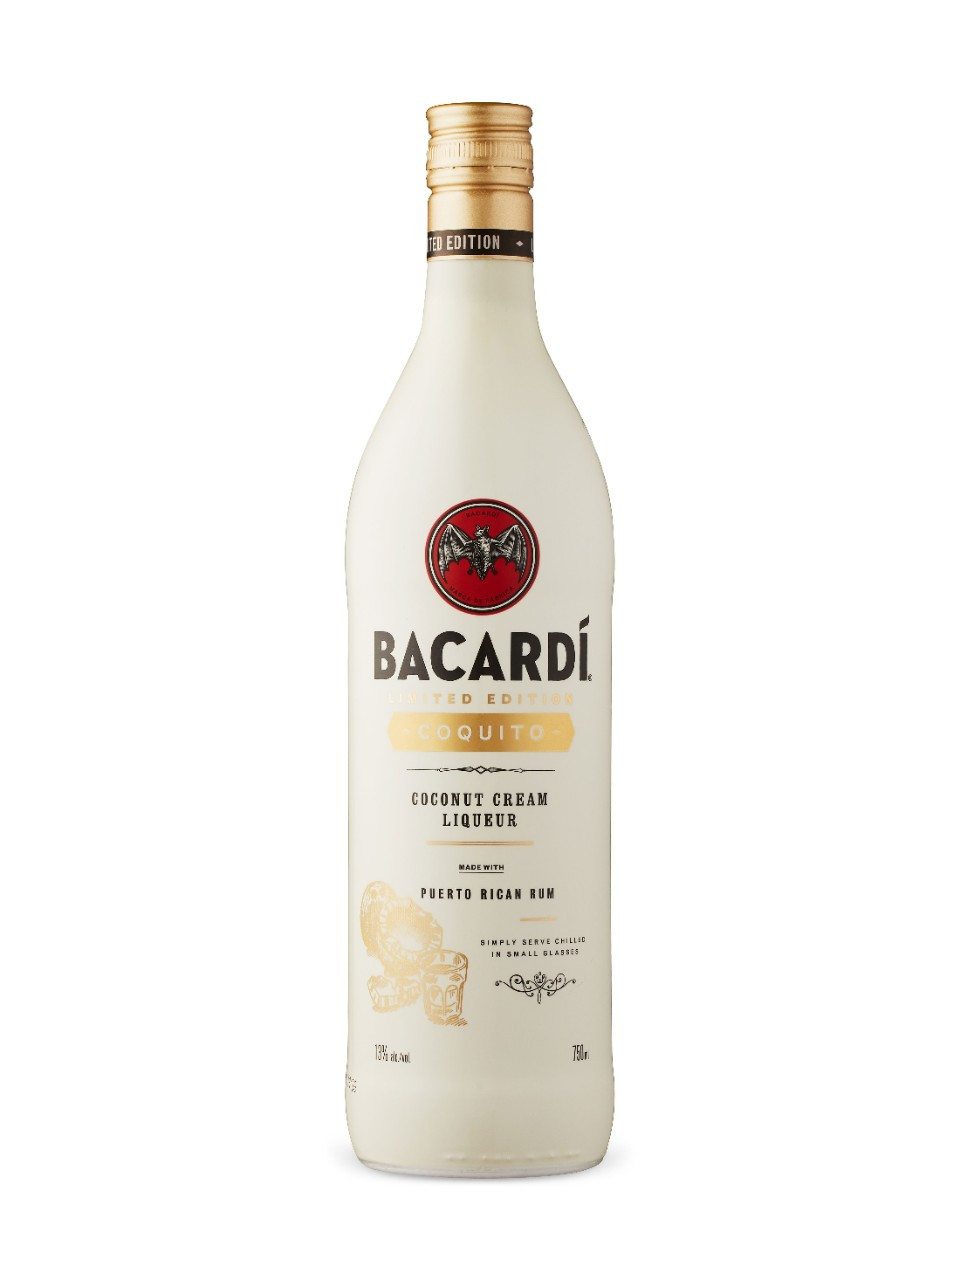 Bacardi coquito  750 ml bottle